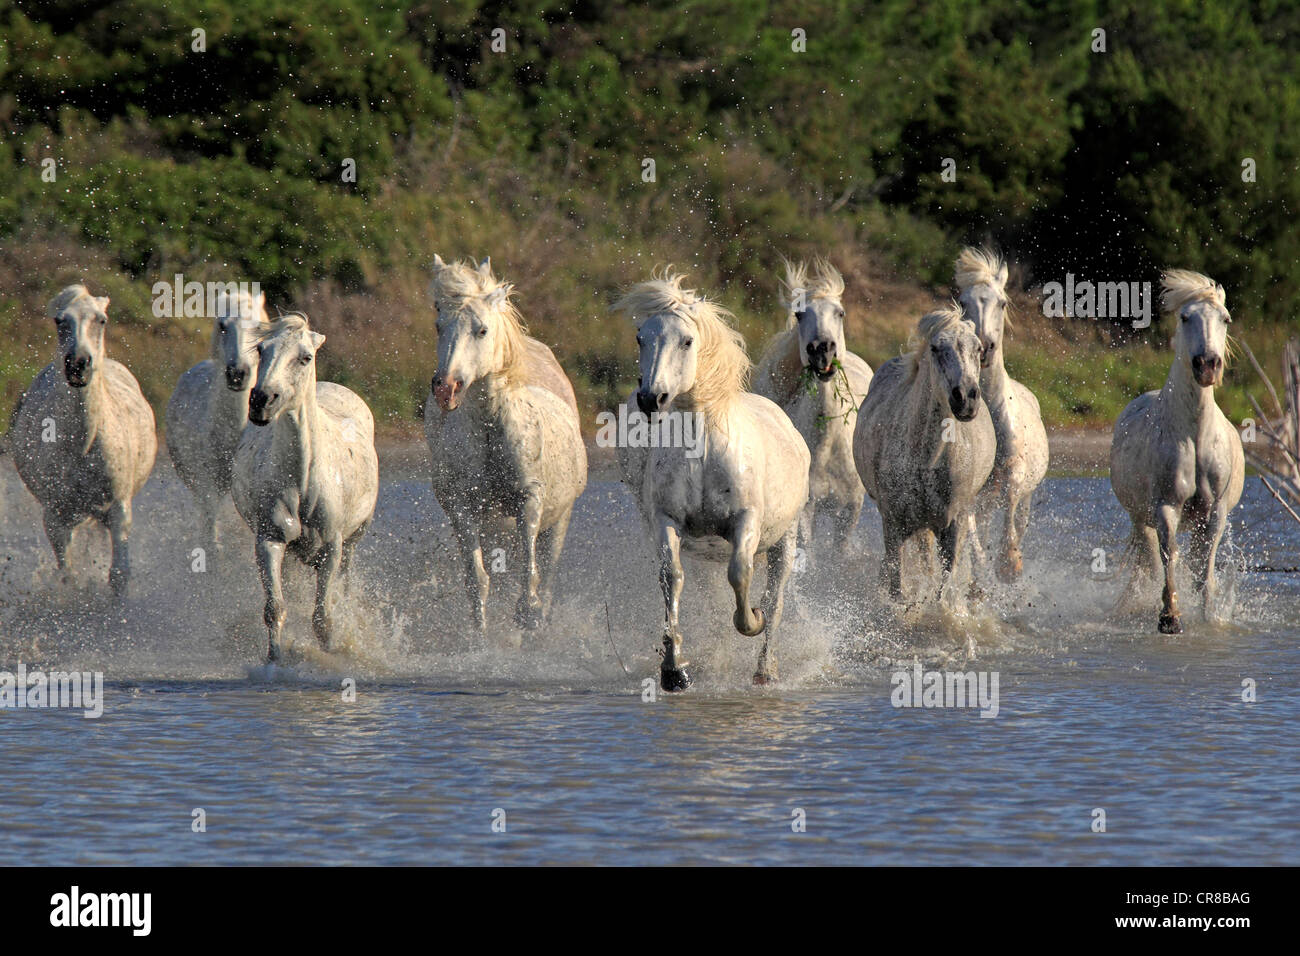 Camargue horses (Equus caballus), herd, gallopping through water, Saintes-Marie-de-la-Mer, Camargue, France, Europe Stock Photo